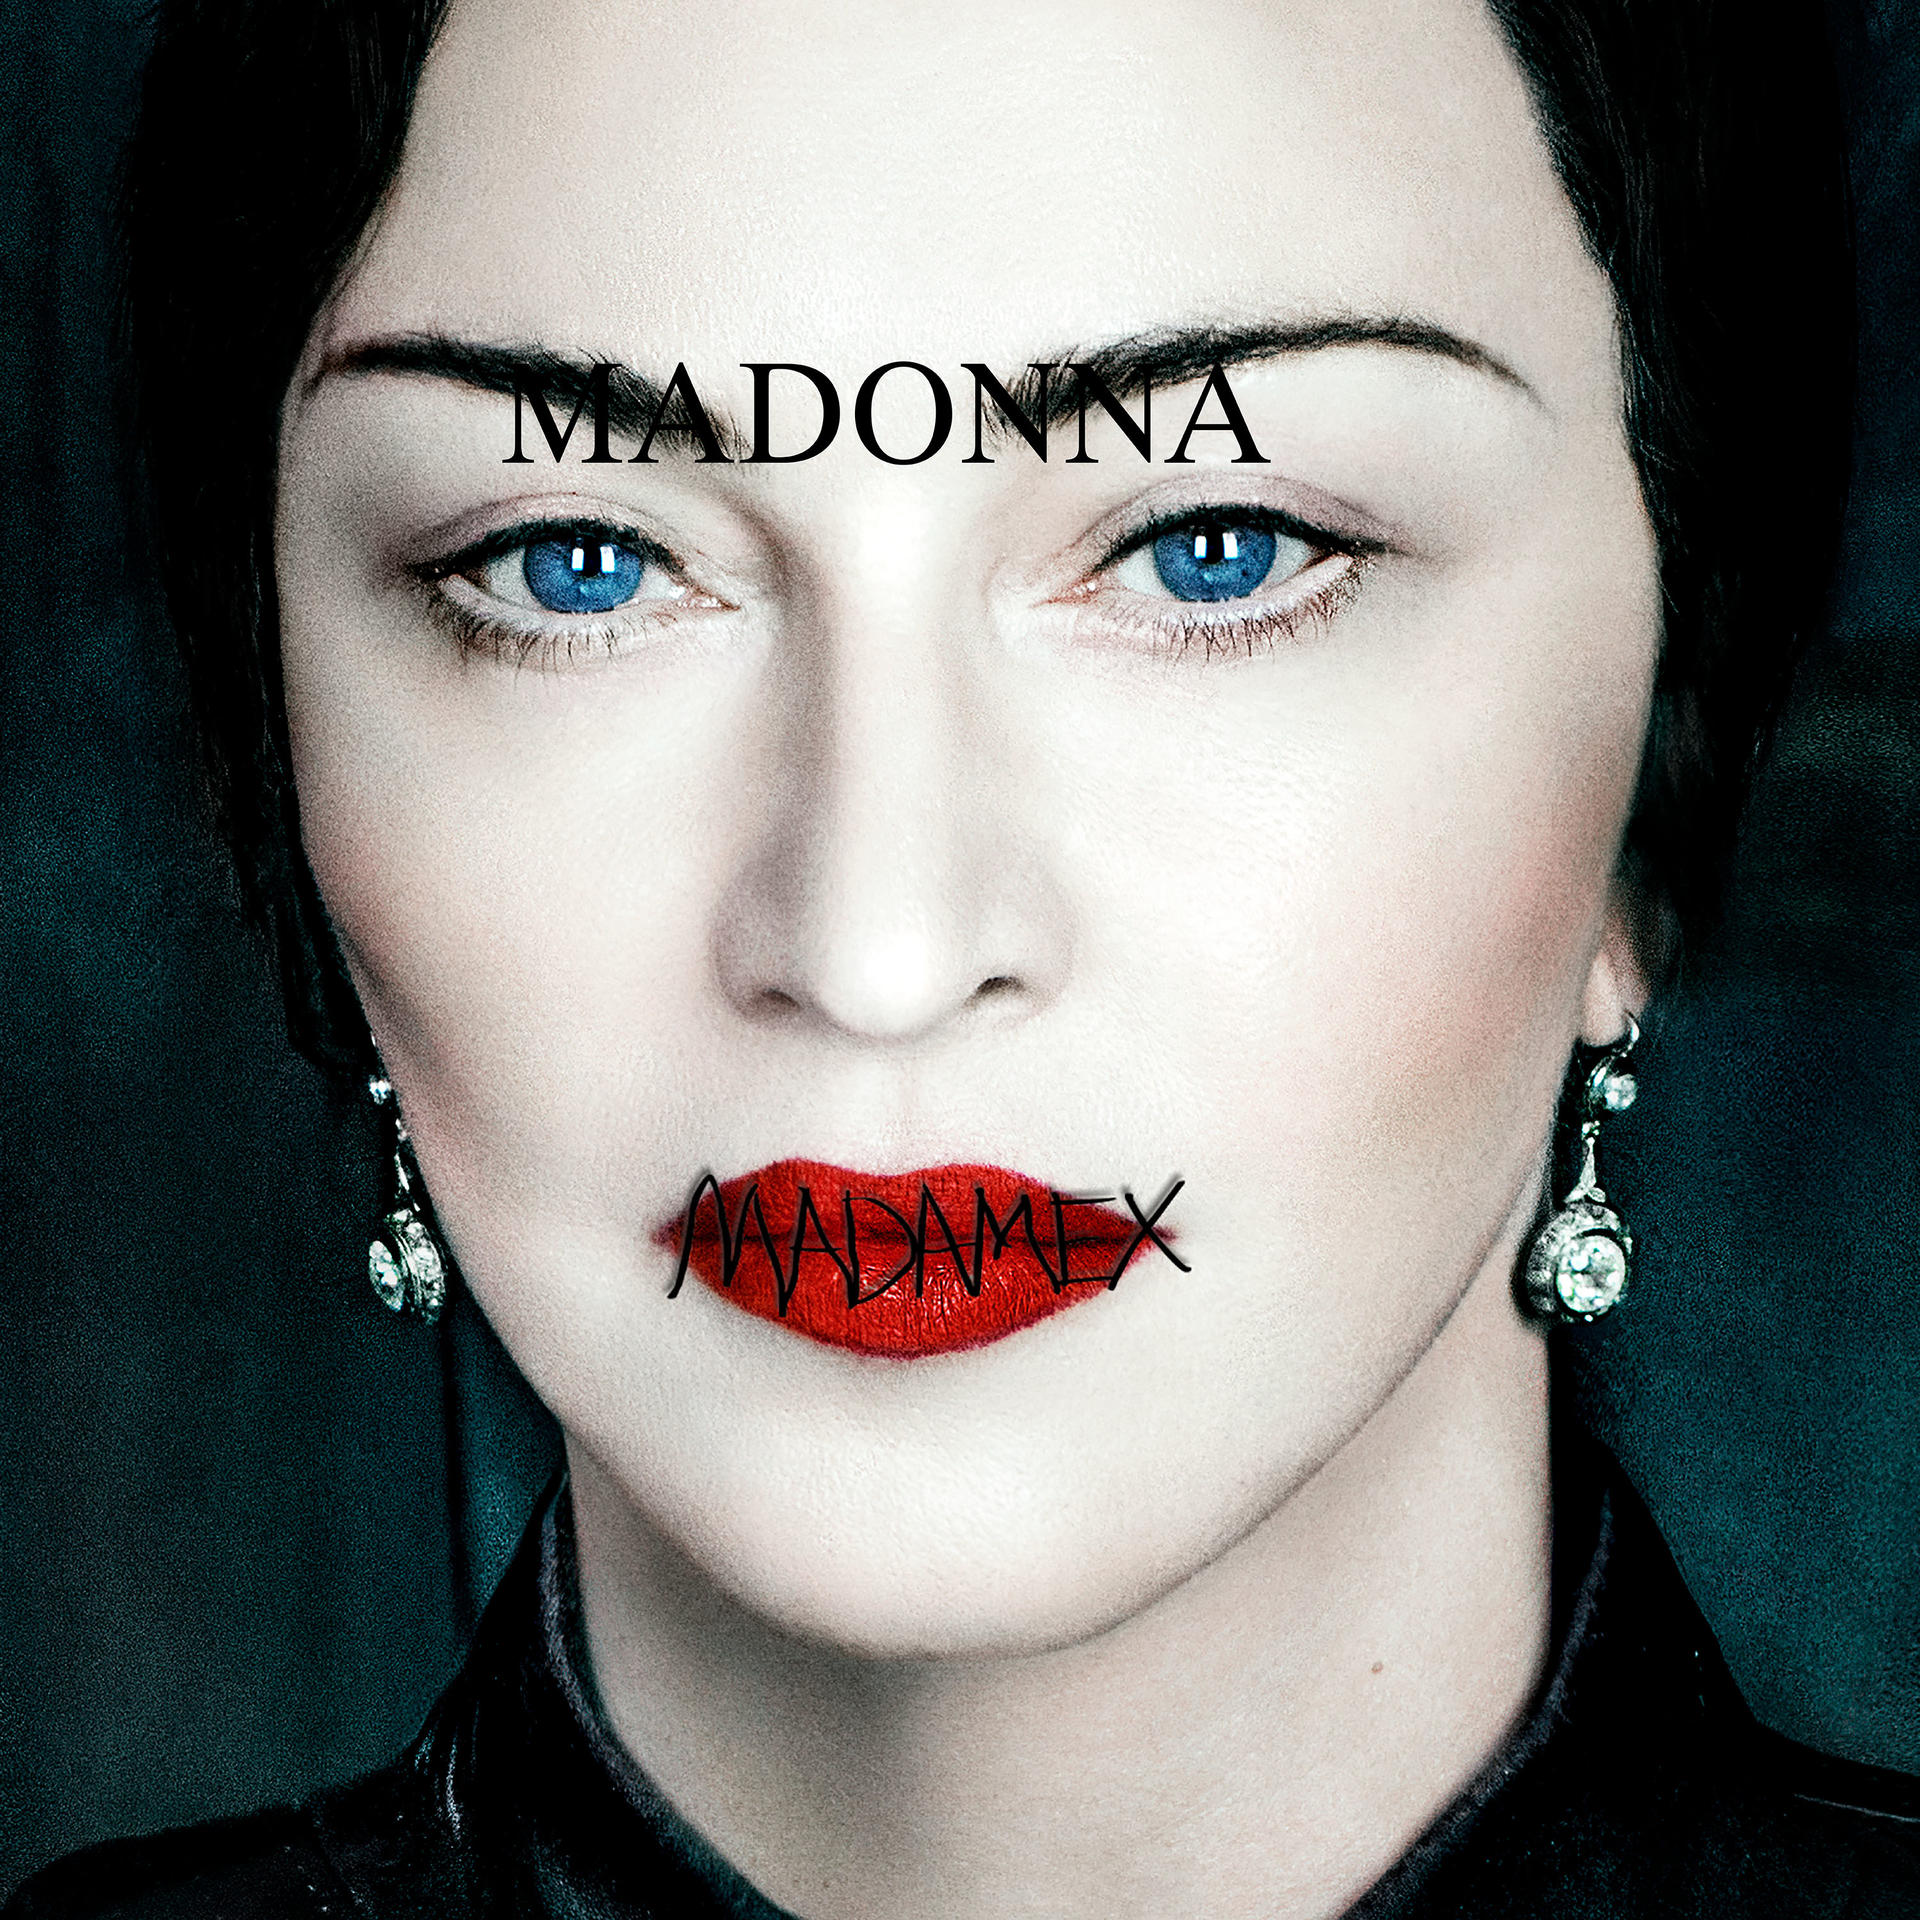 Madonna - Madame Jewel in + Booklet) Case - X (1CD (CD)